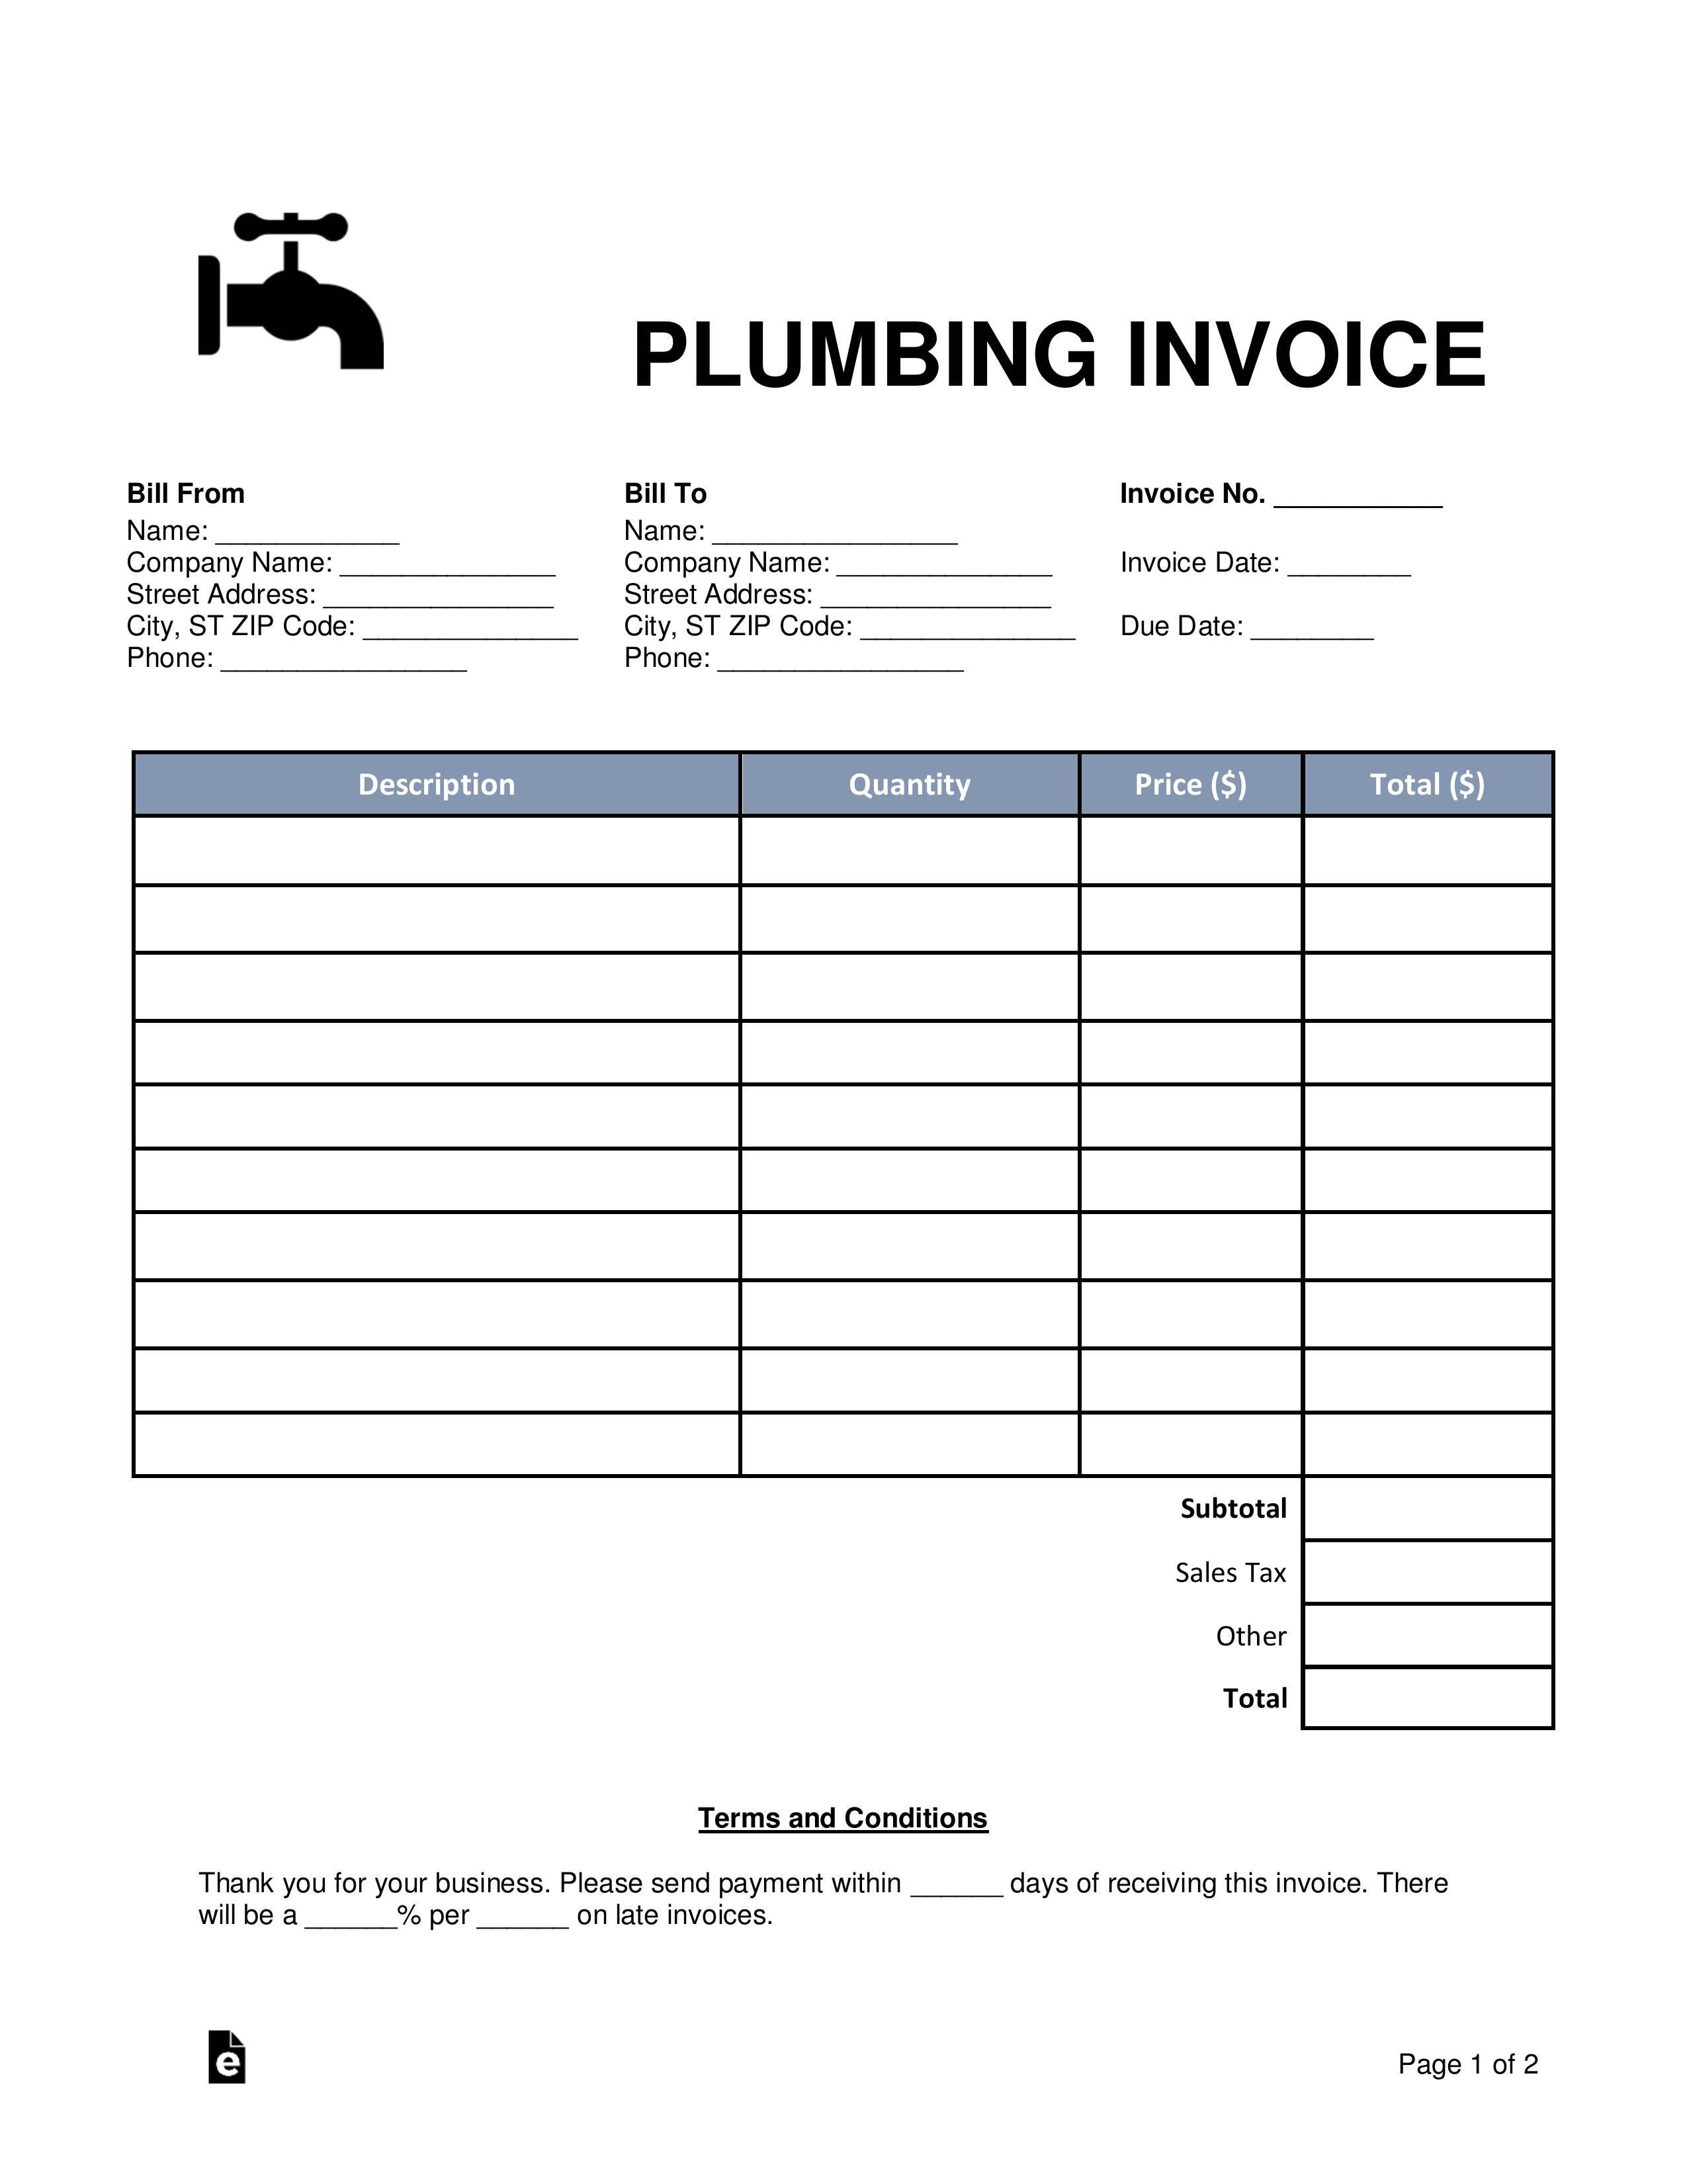 free plumbing invoice template word pdf eforms free free printable plumbing invoice template